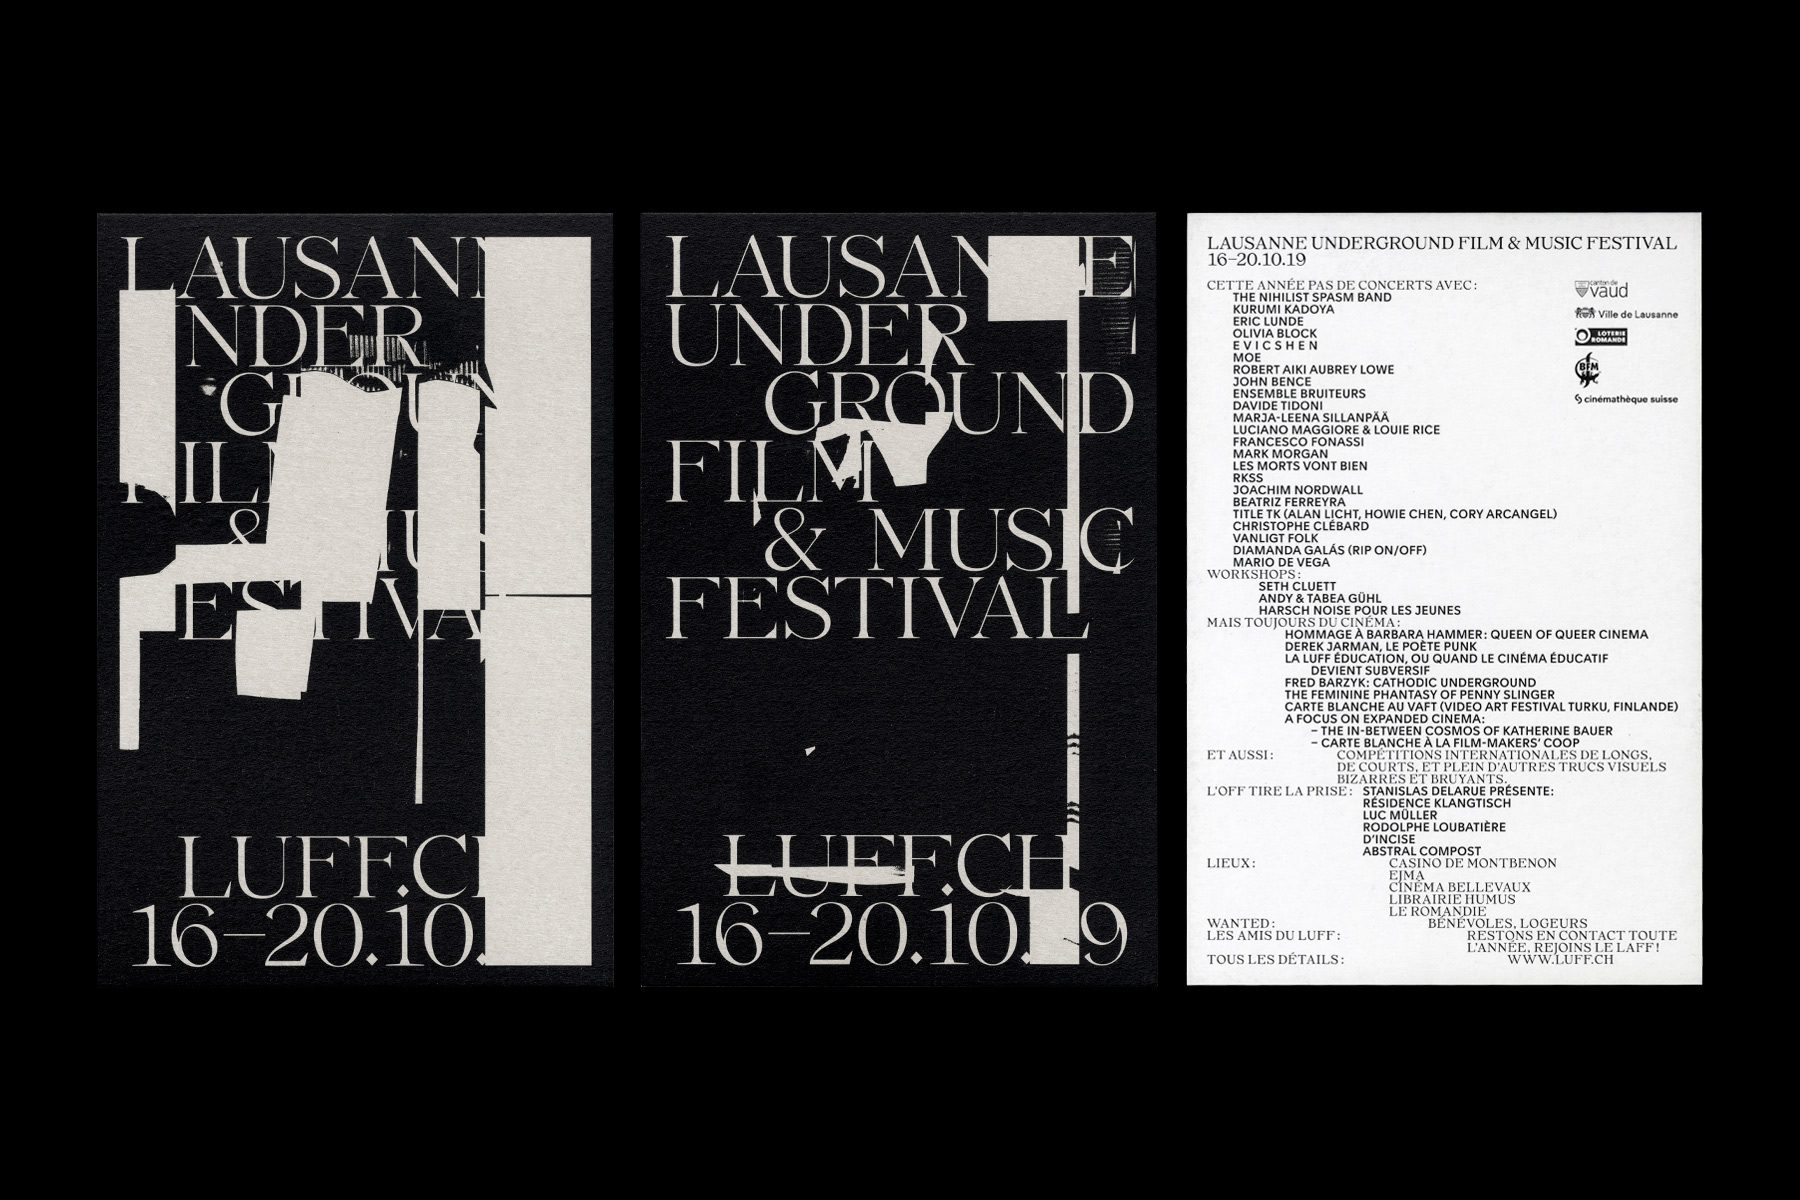 LUFF_Lausanne-Underground-Film-and-Music-Festival_2019_Dimitri-Jeannottat_1800x1200_20c